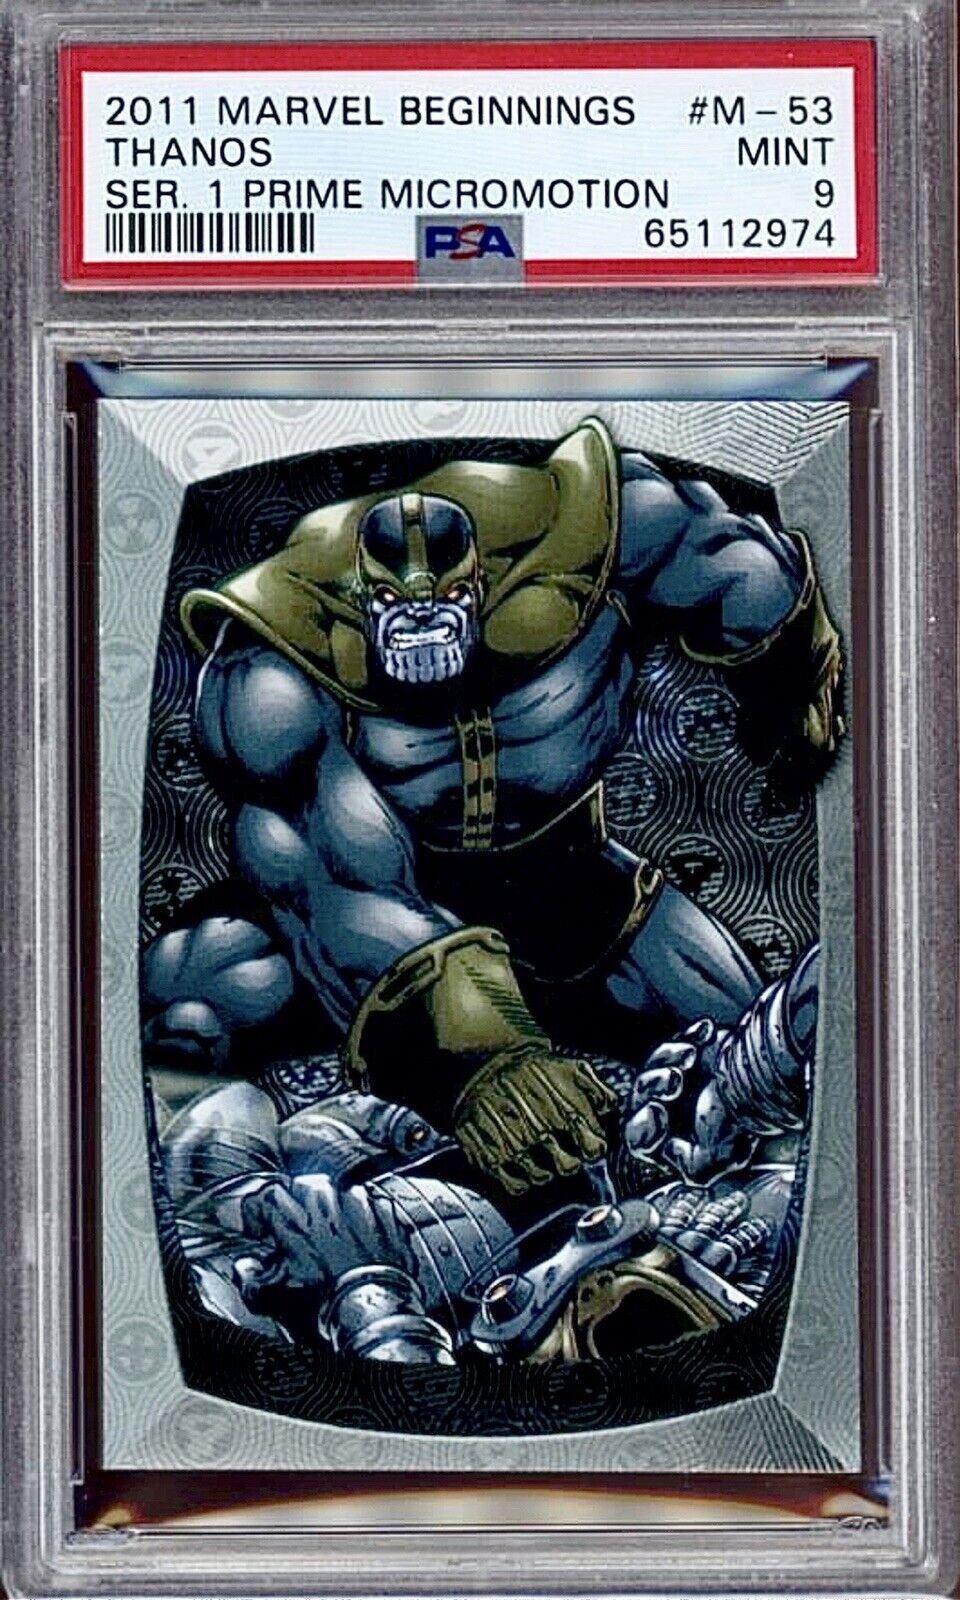 2011 Marvel Beginnings #M-53 Thanos Ser. 1 Prime Micromotion PSA 9 🔥 RARE 🔥